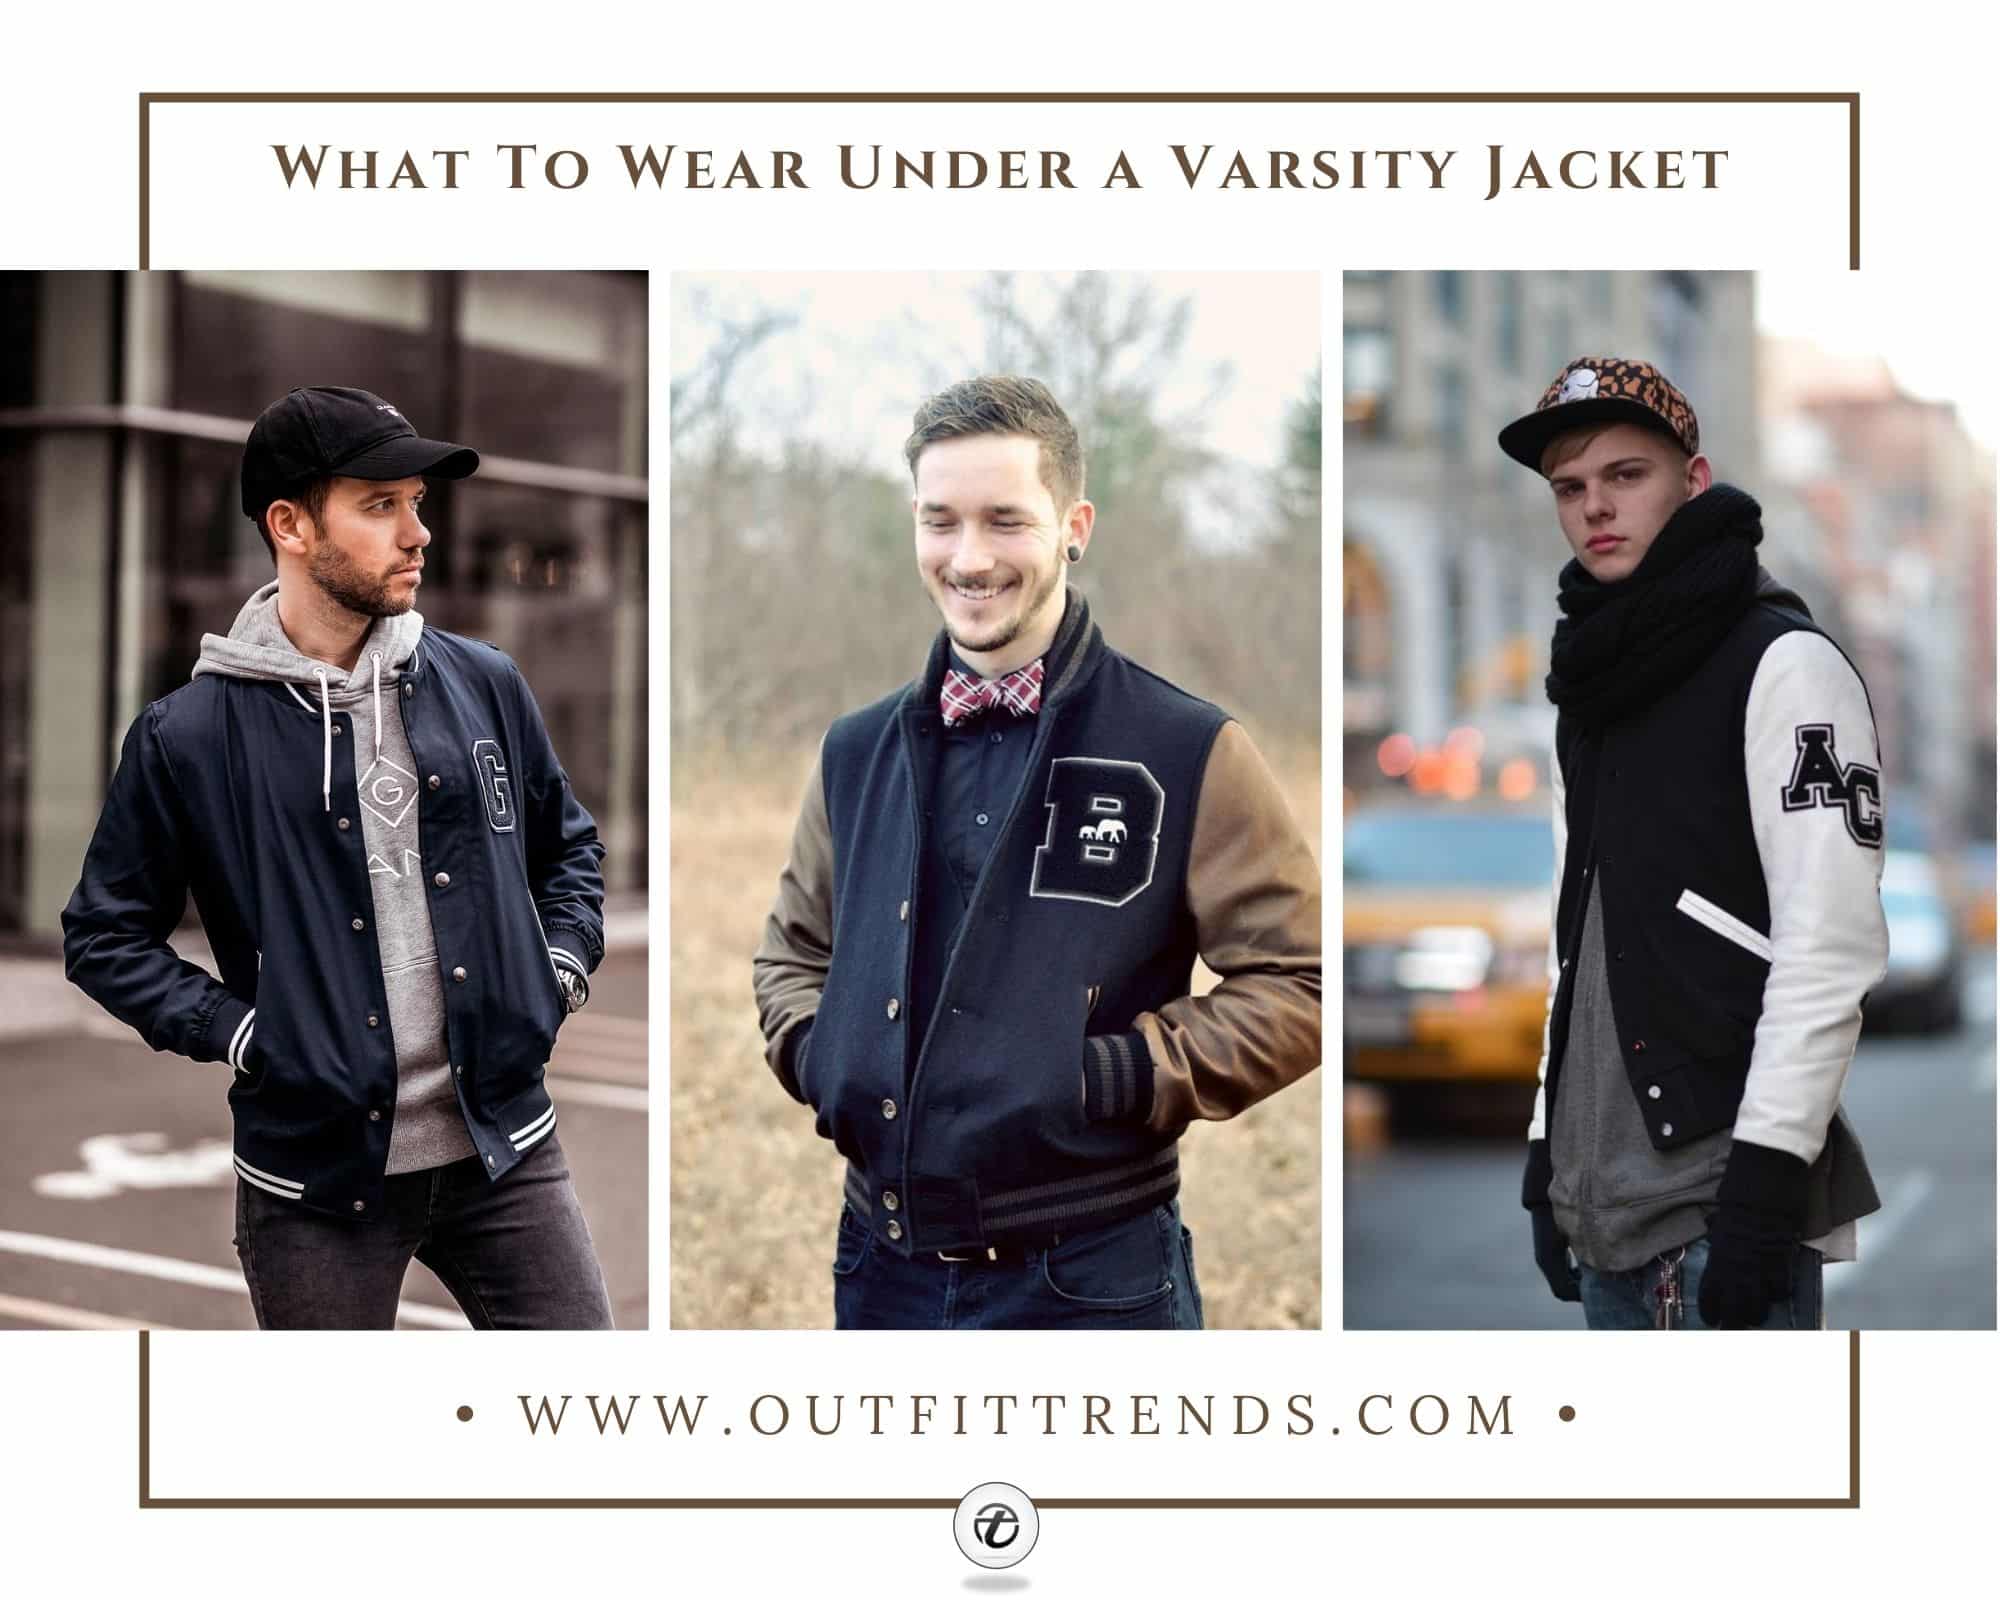 varsity jackets for men